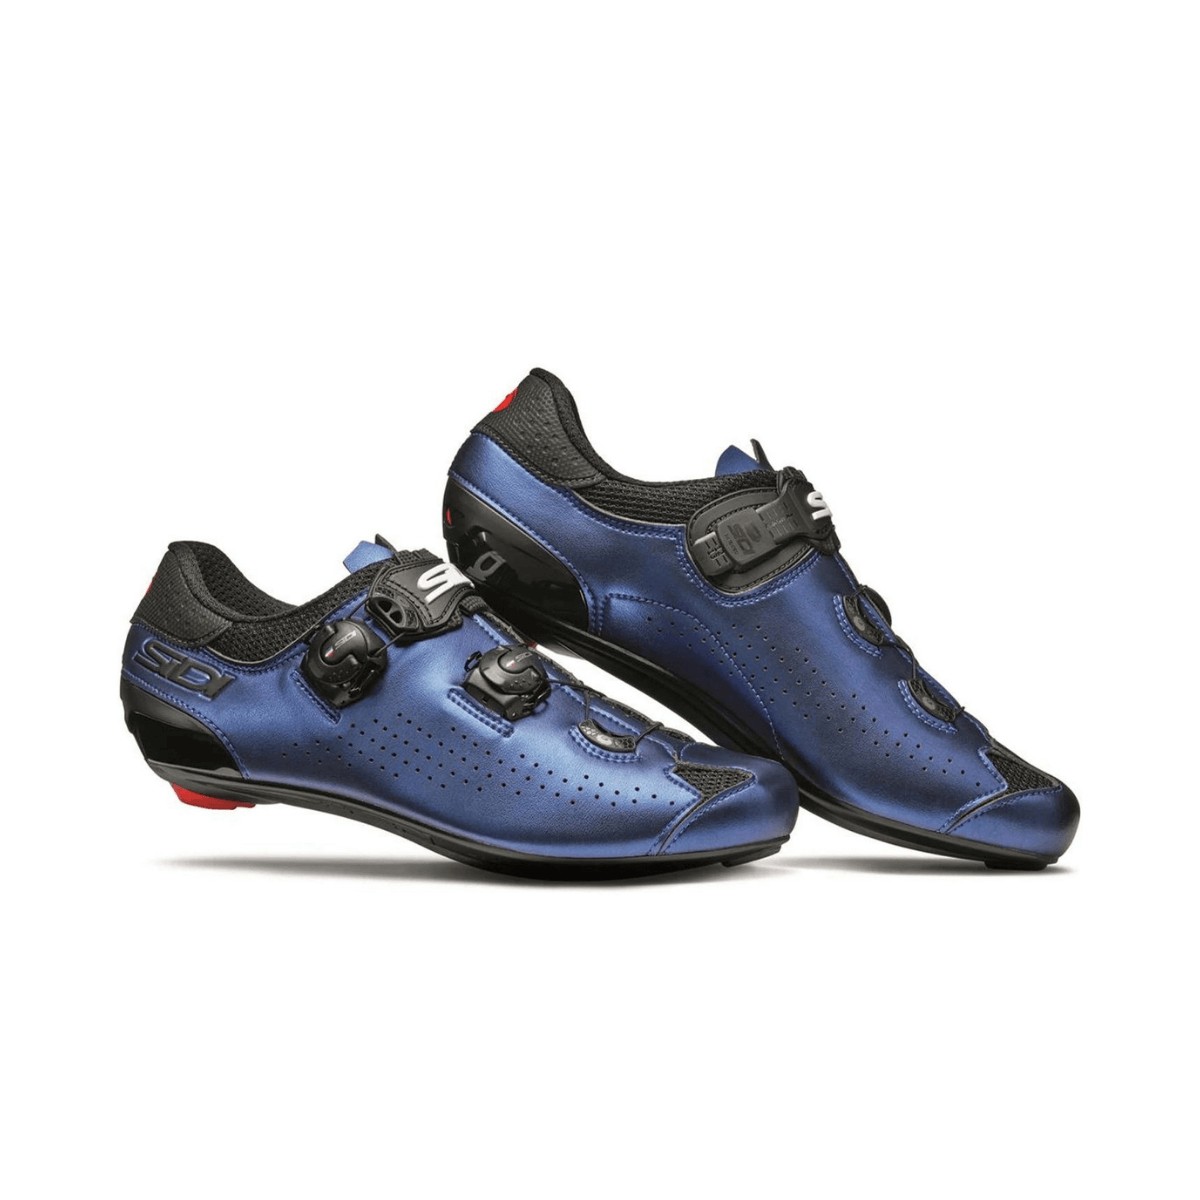 Sidi Genius 10 Road Shoes Blue Iridescent, Size 42 - EUR